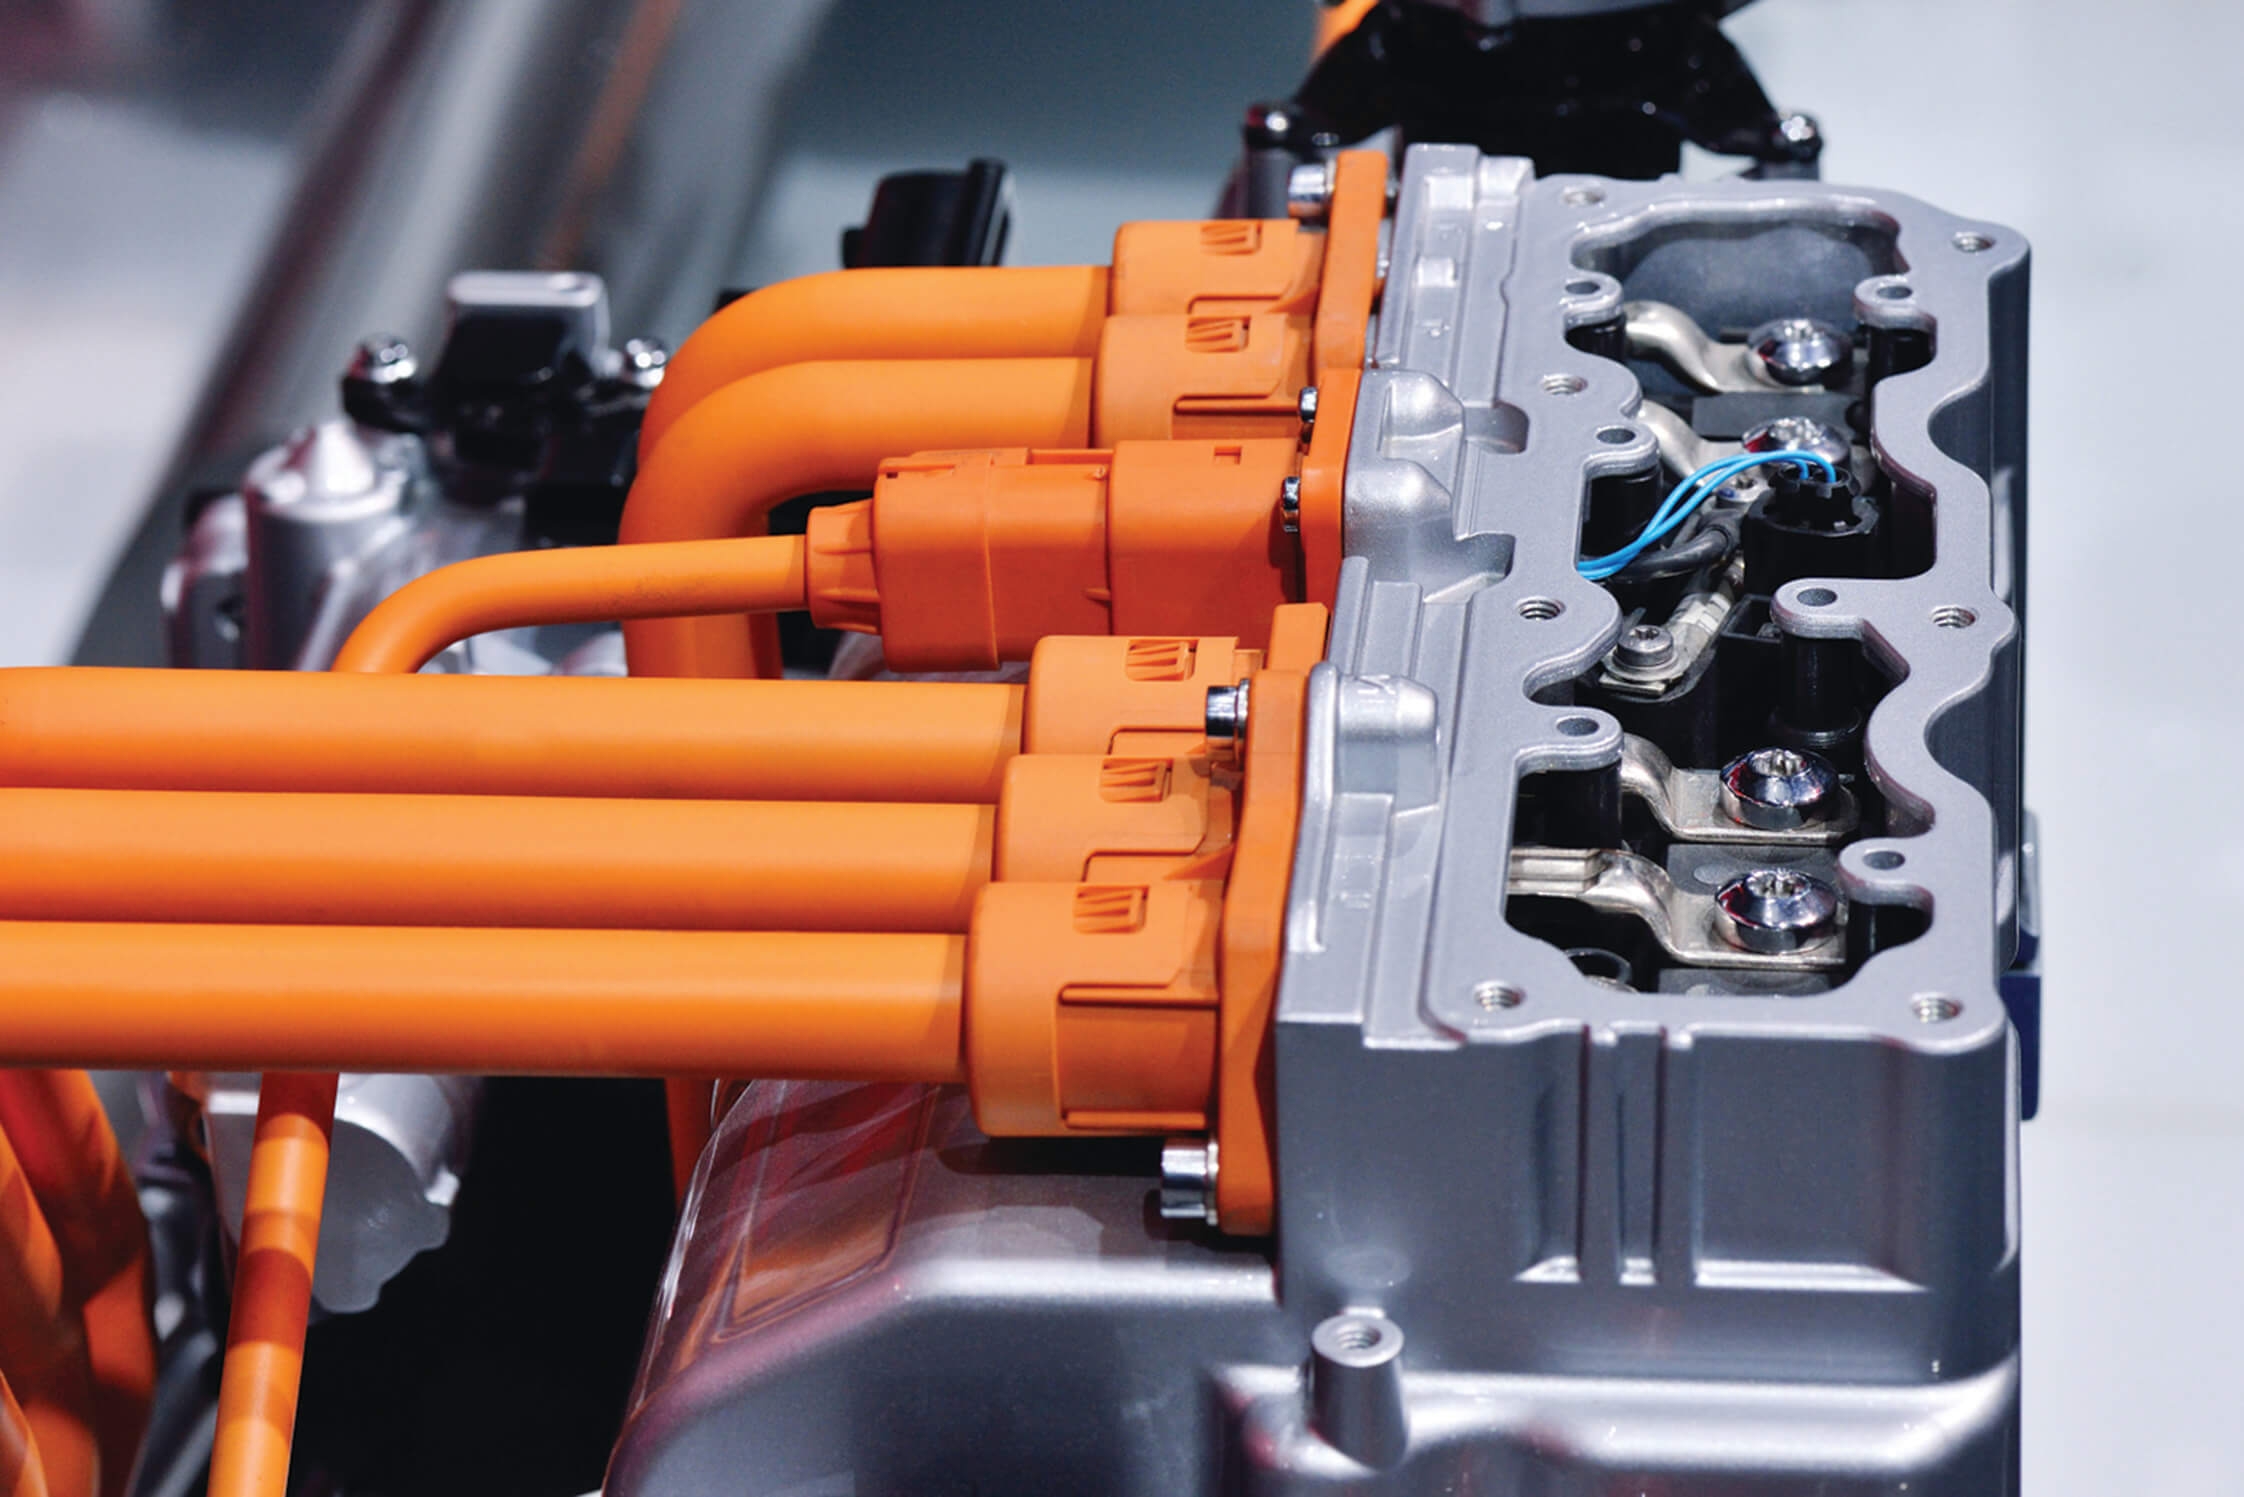 Image inside an engine showing orange engine parts